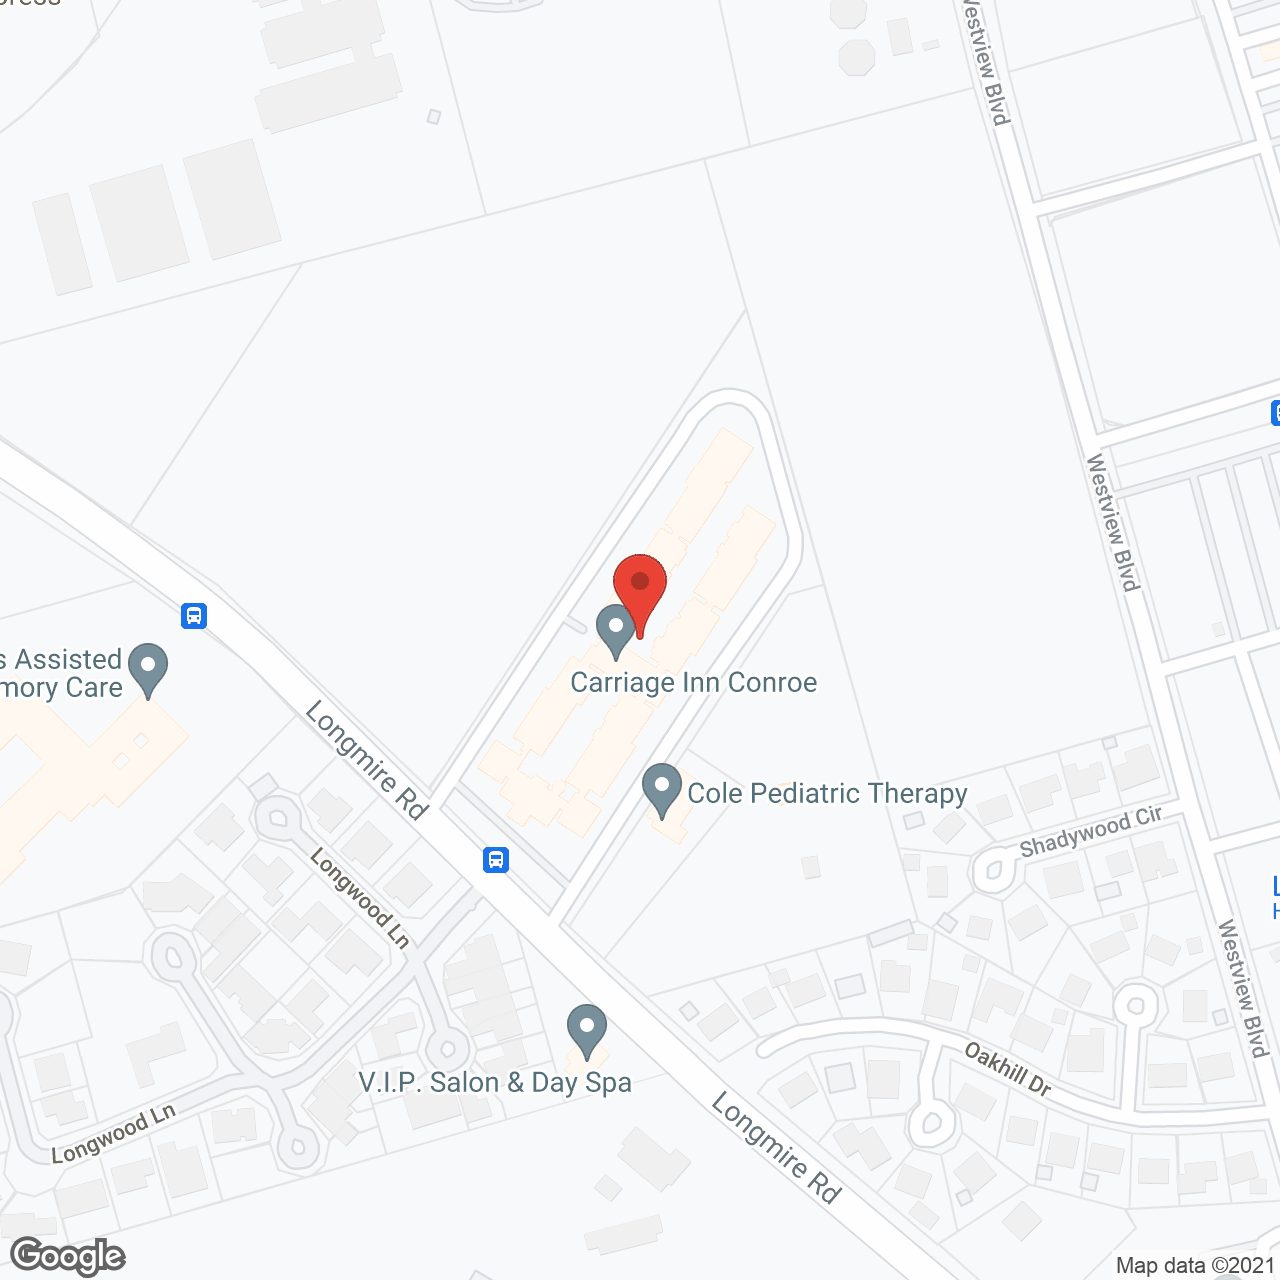 Carriage Inn Conroe in google map